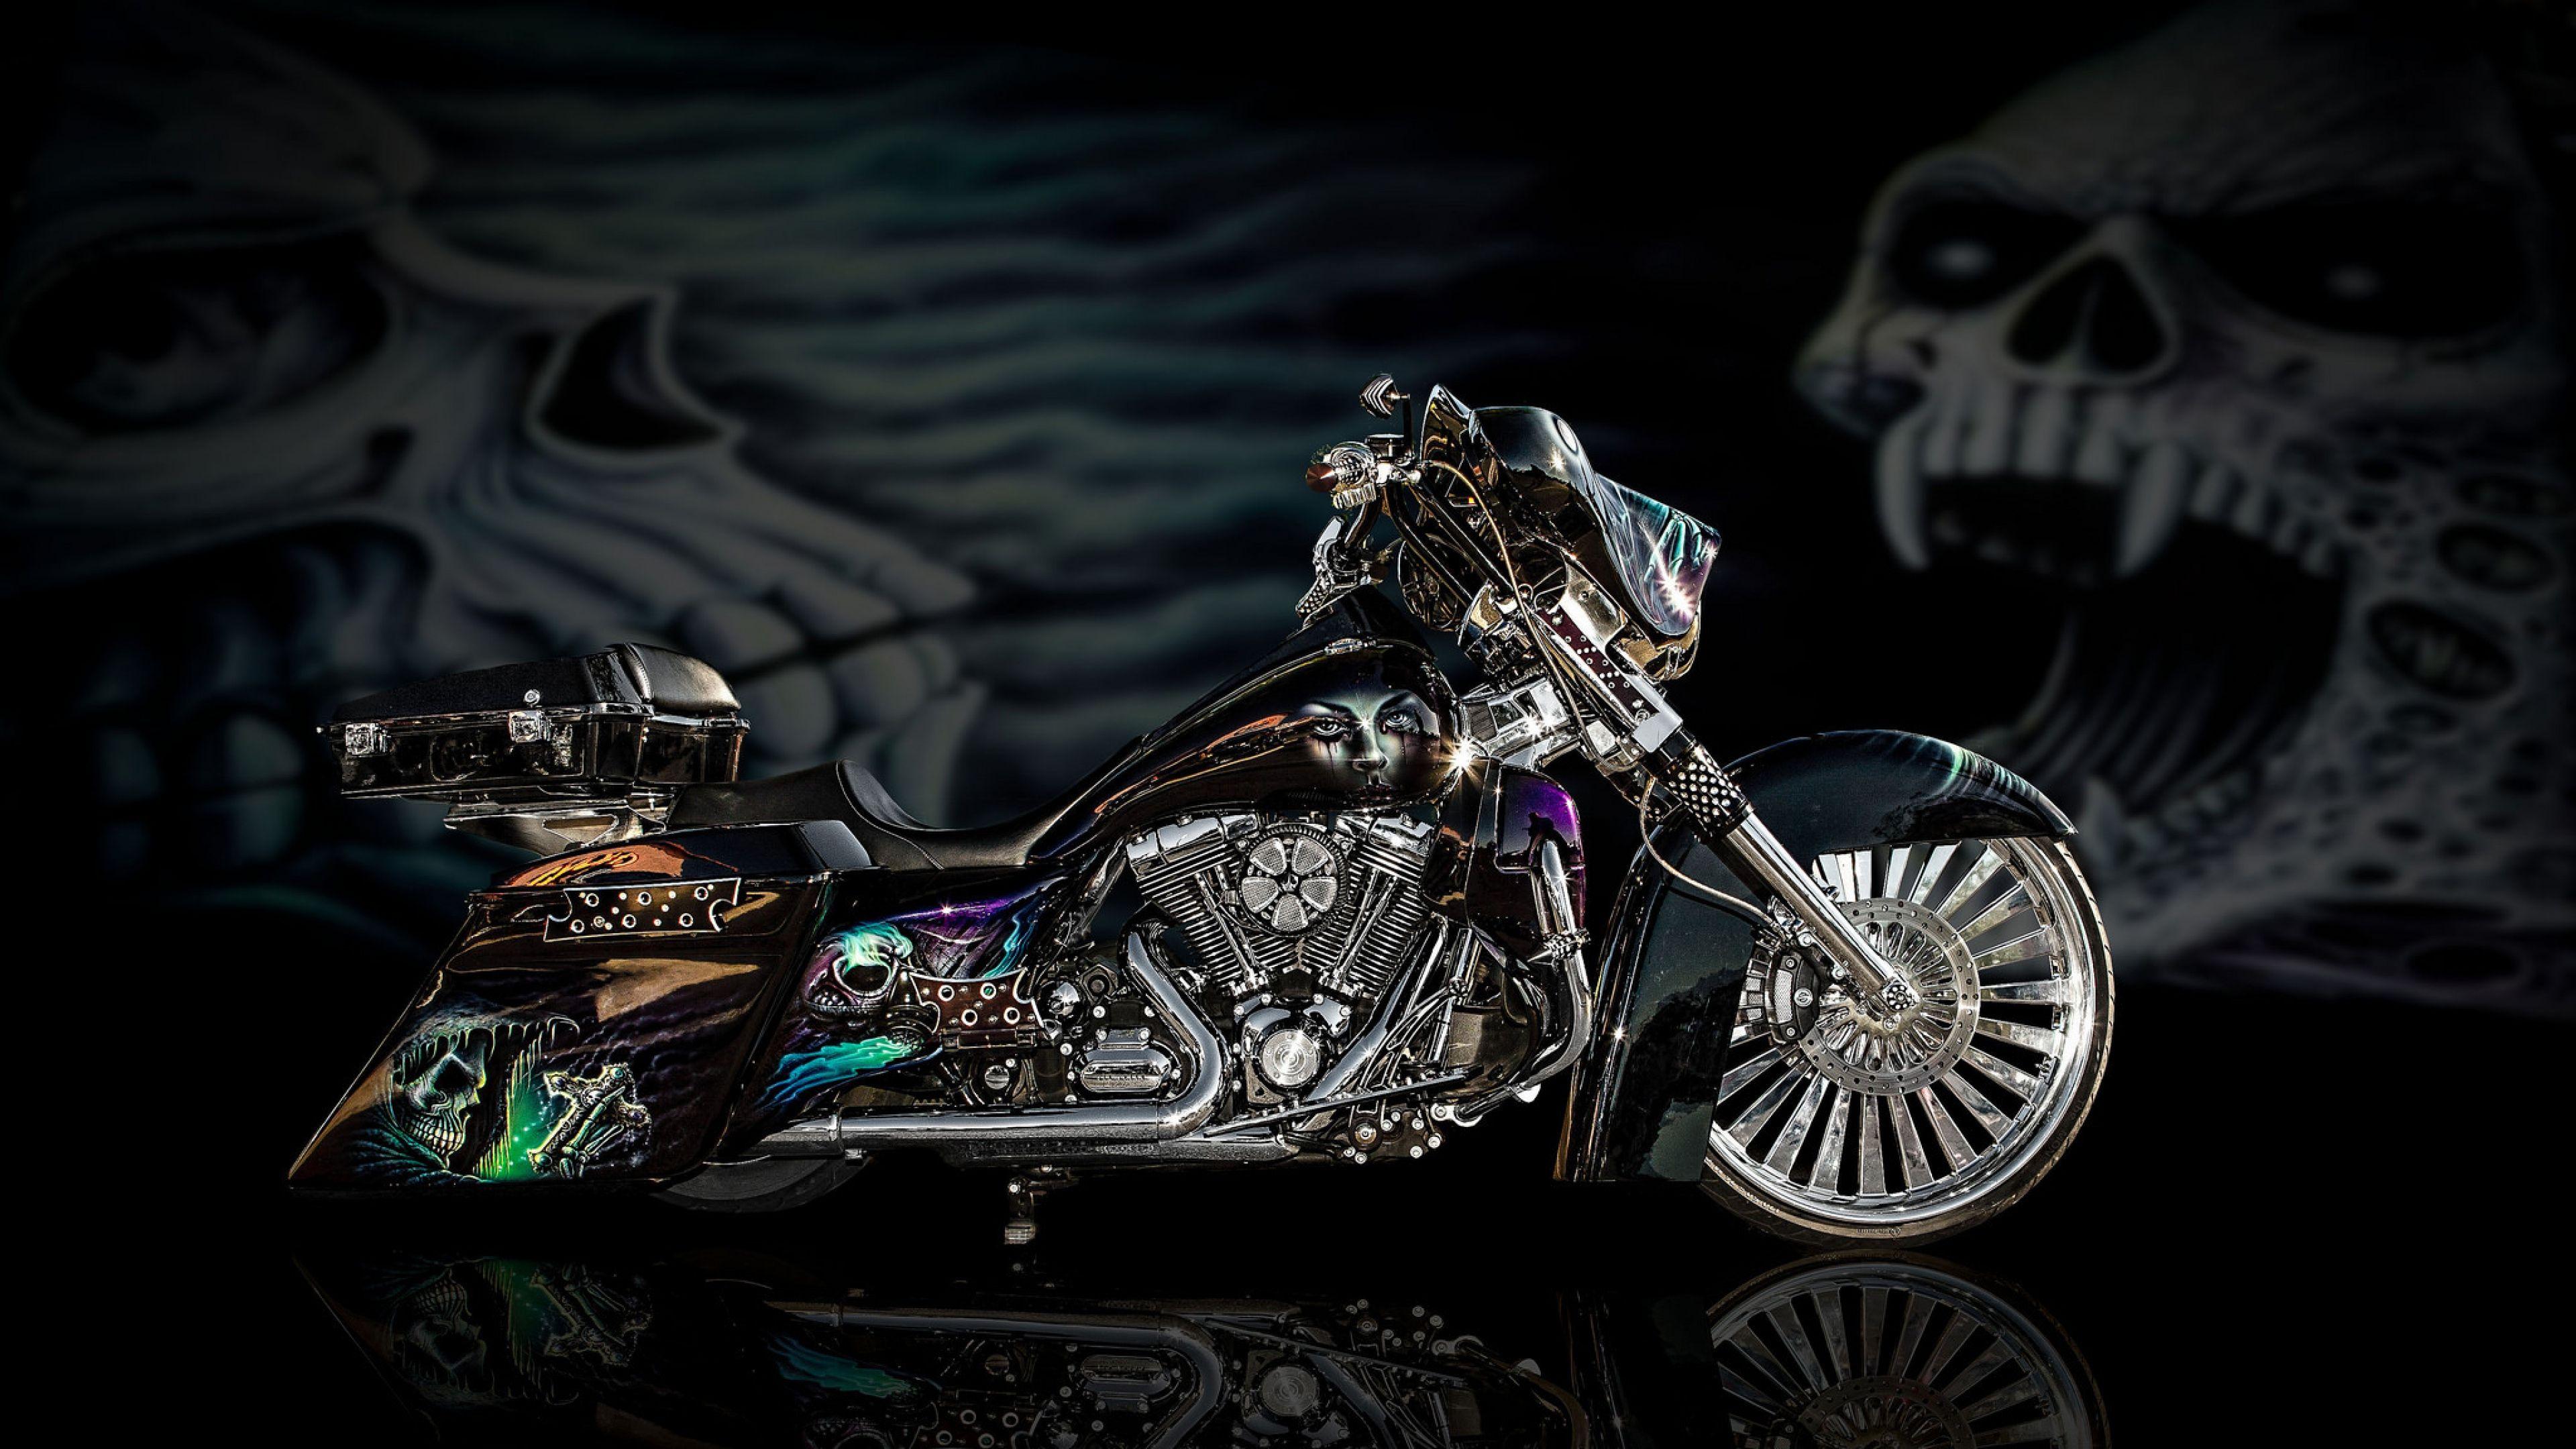 Ghost Design Chopper, HD Bikes, 4k Wallpaper, Image, Background